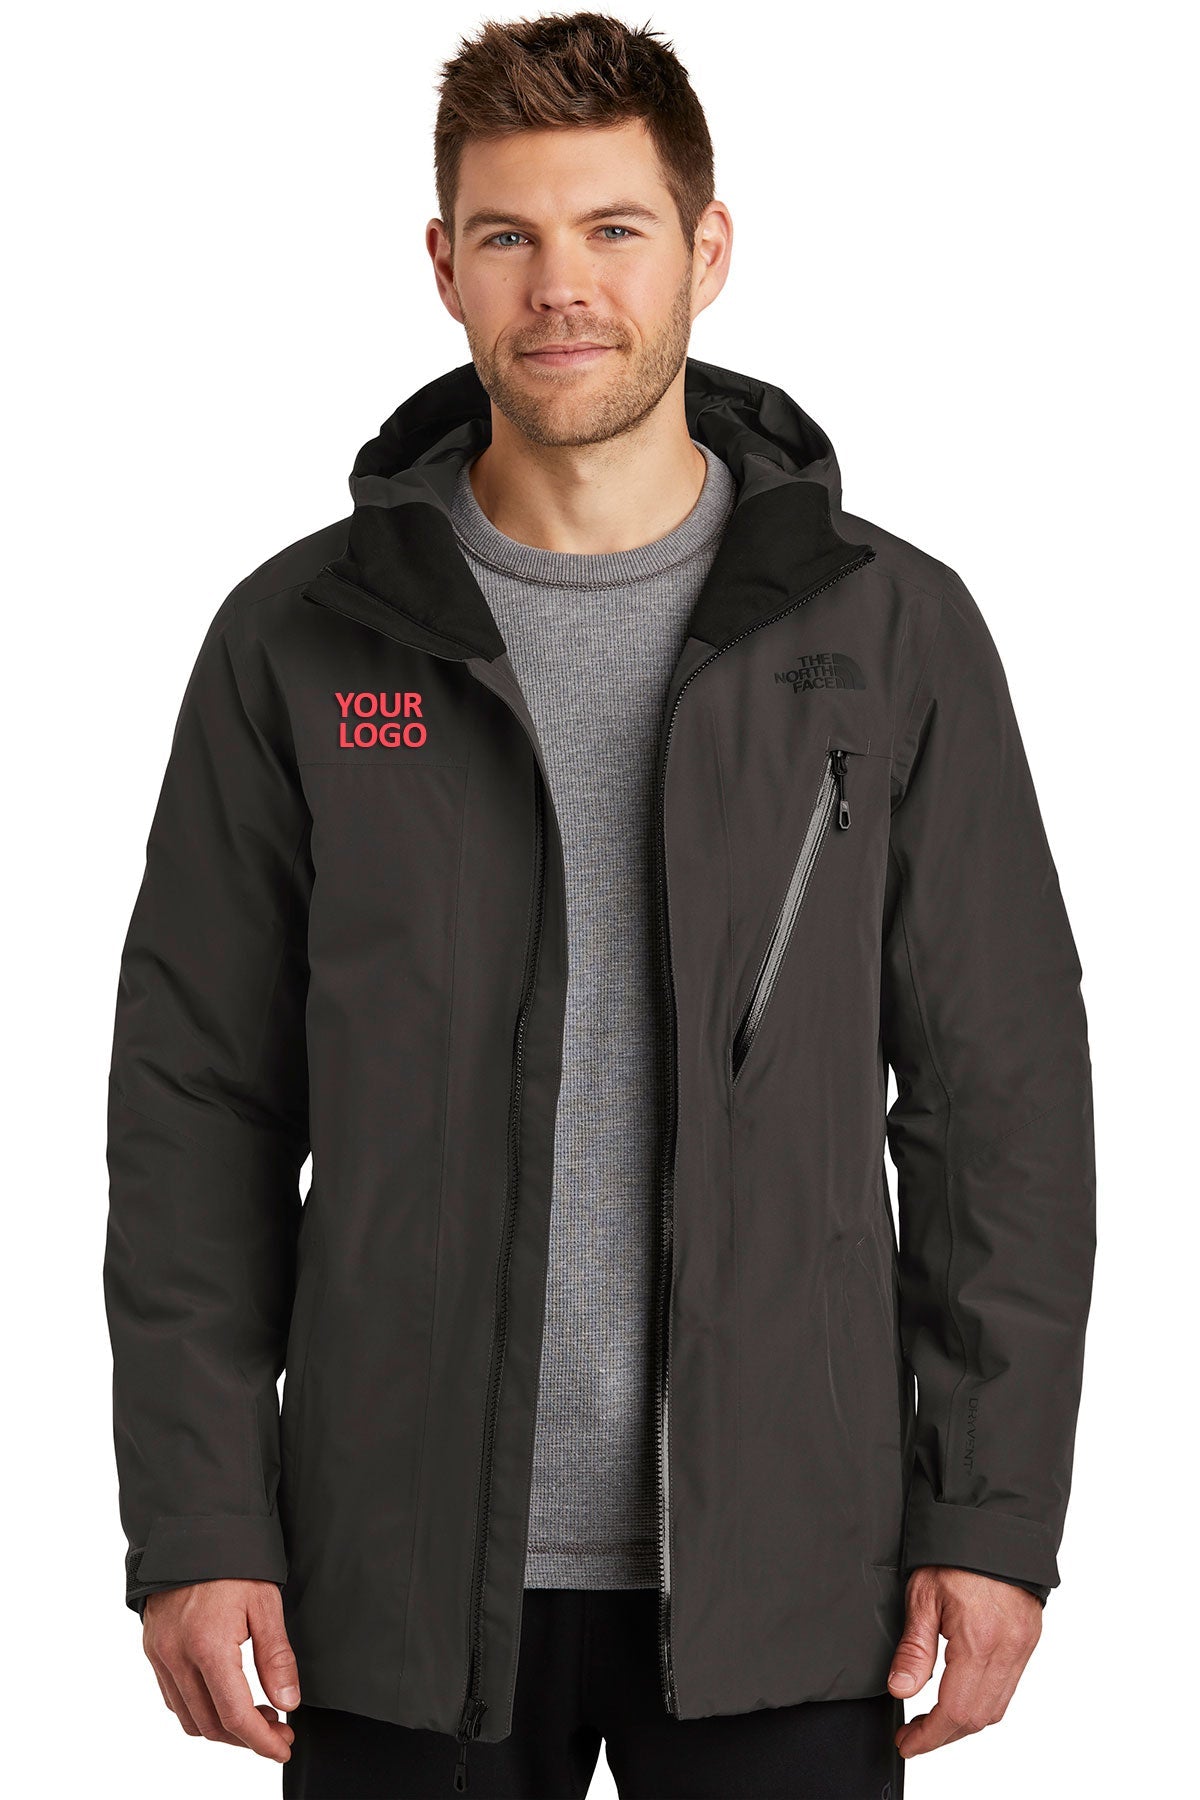 The North Face Asphalt Grey NF0A3SES company logo jackets